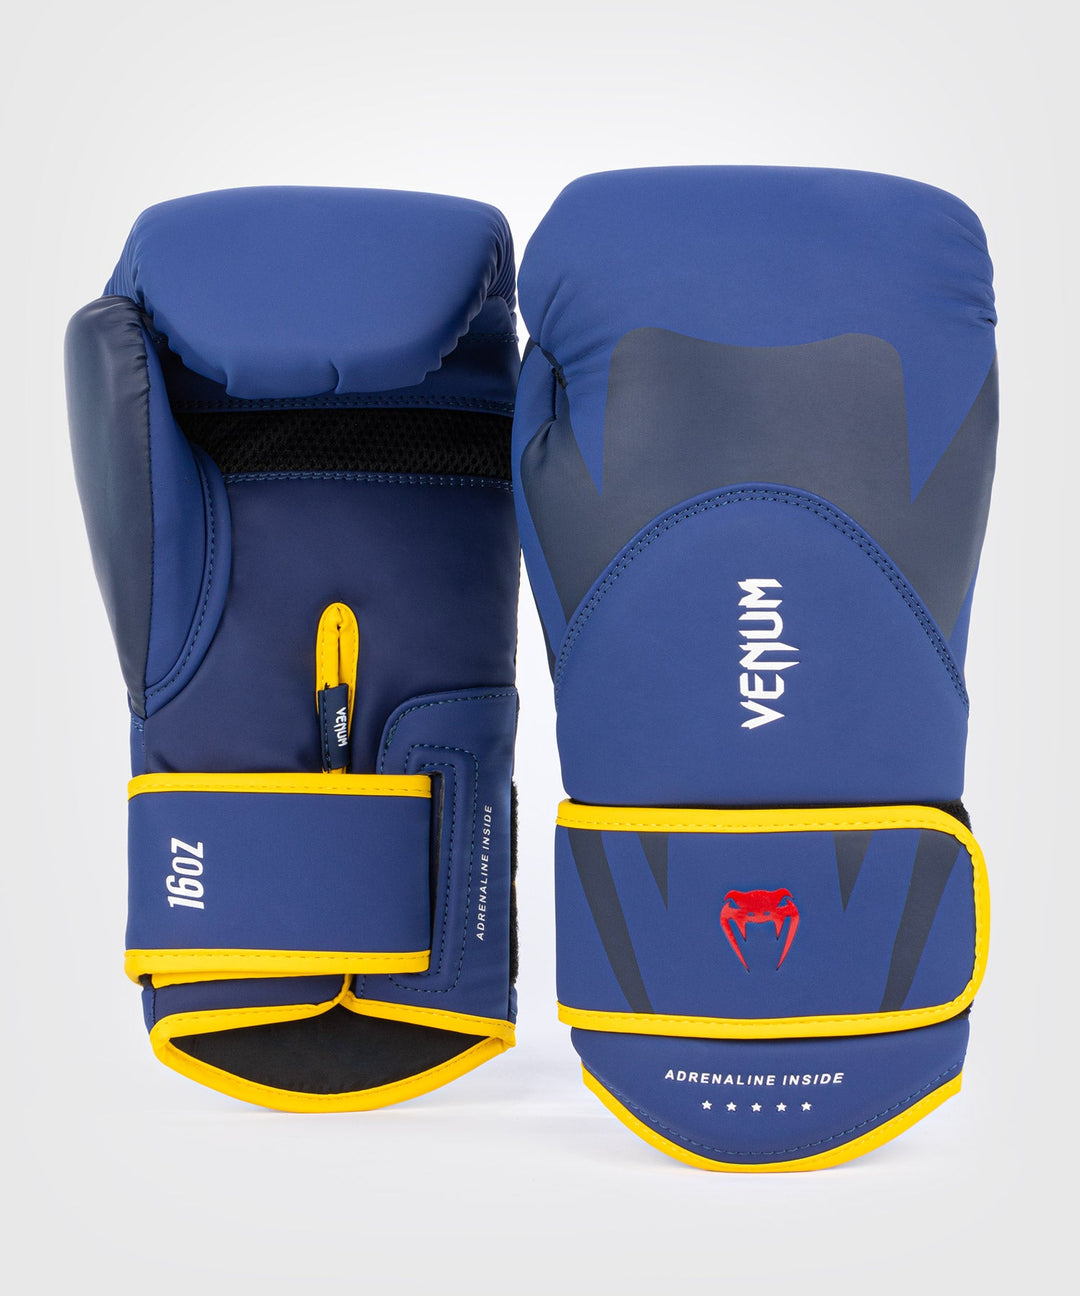 Venum Challenger 4.0 Boxing Gloves